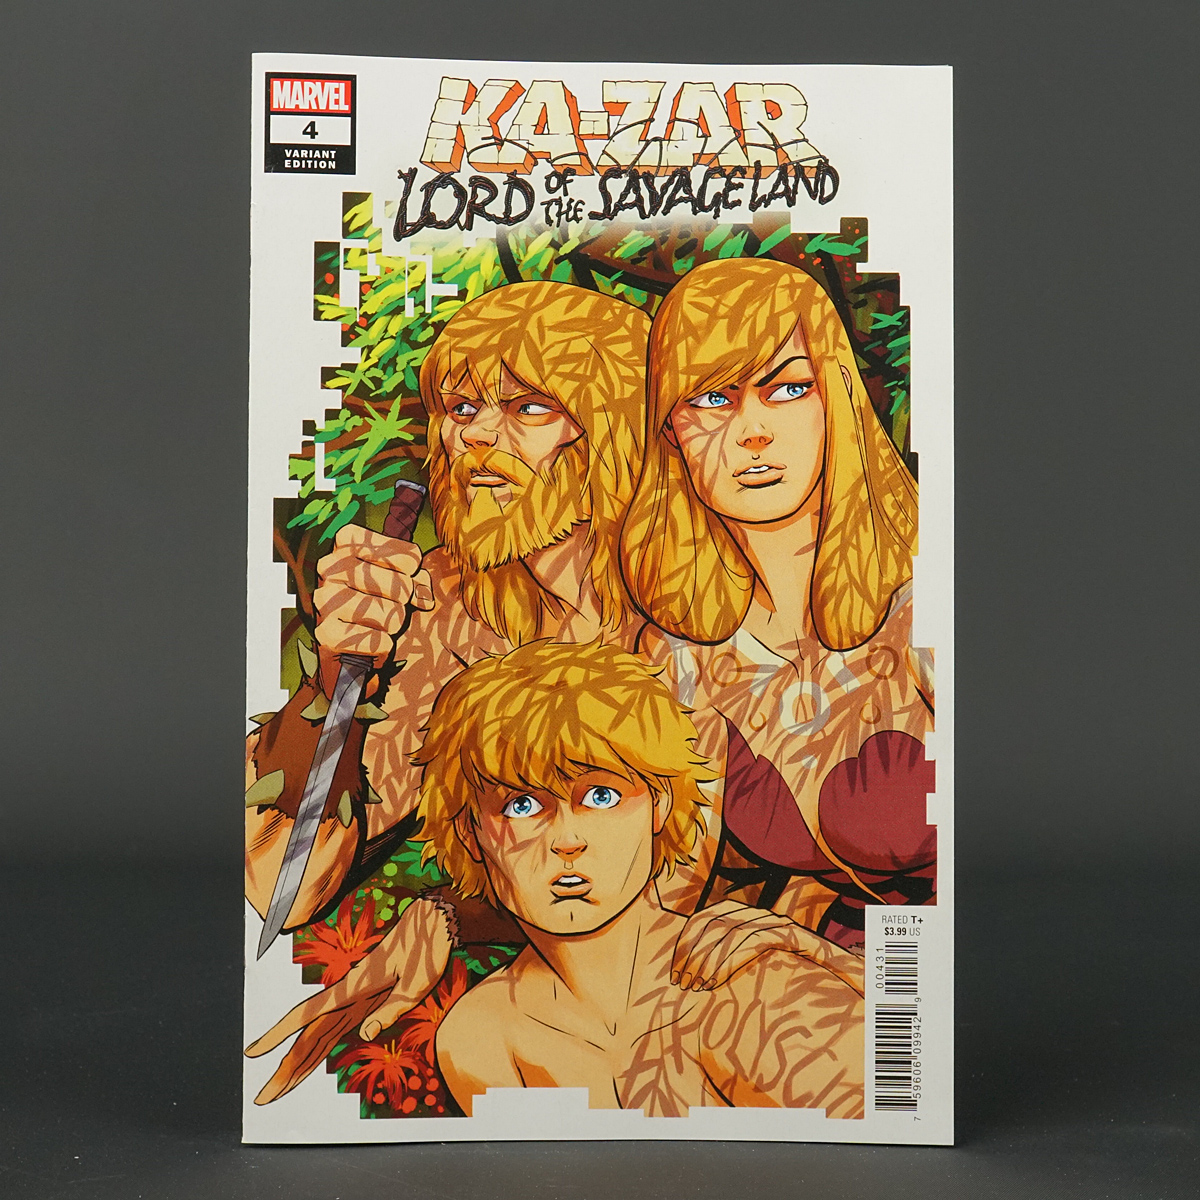 KA-ZAR LORD SAVAGE LAND #4 var Marvel Comics 2021 OCT210932 (CA) Rodriguez (W) Thompson (A) Garcia + Lopez